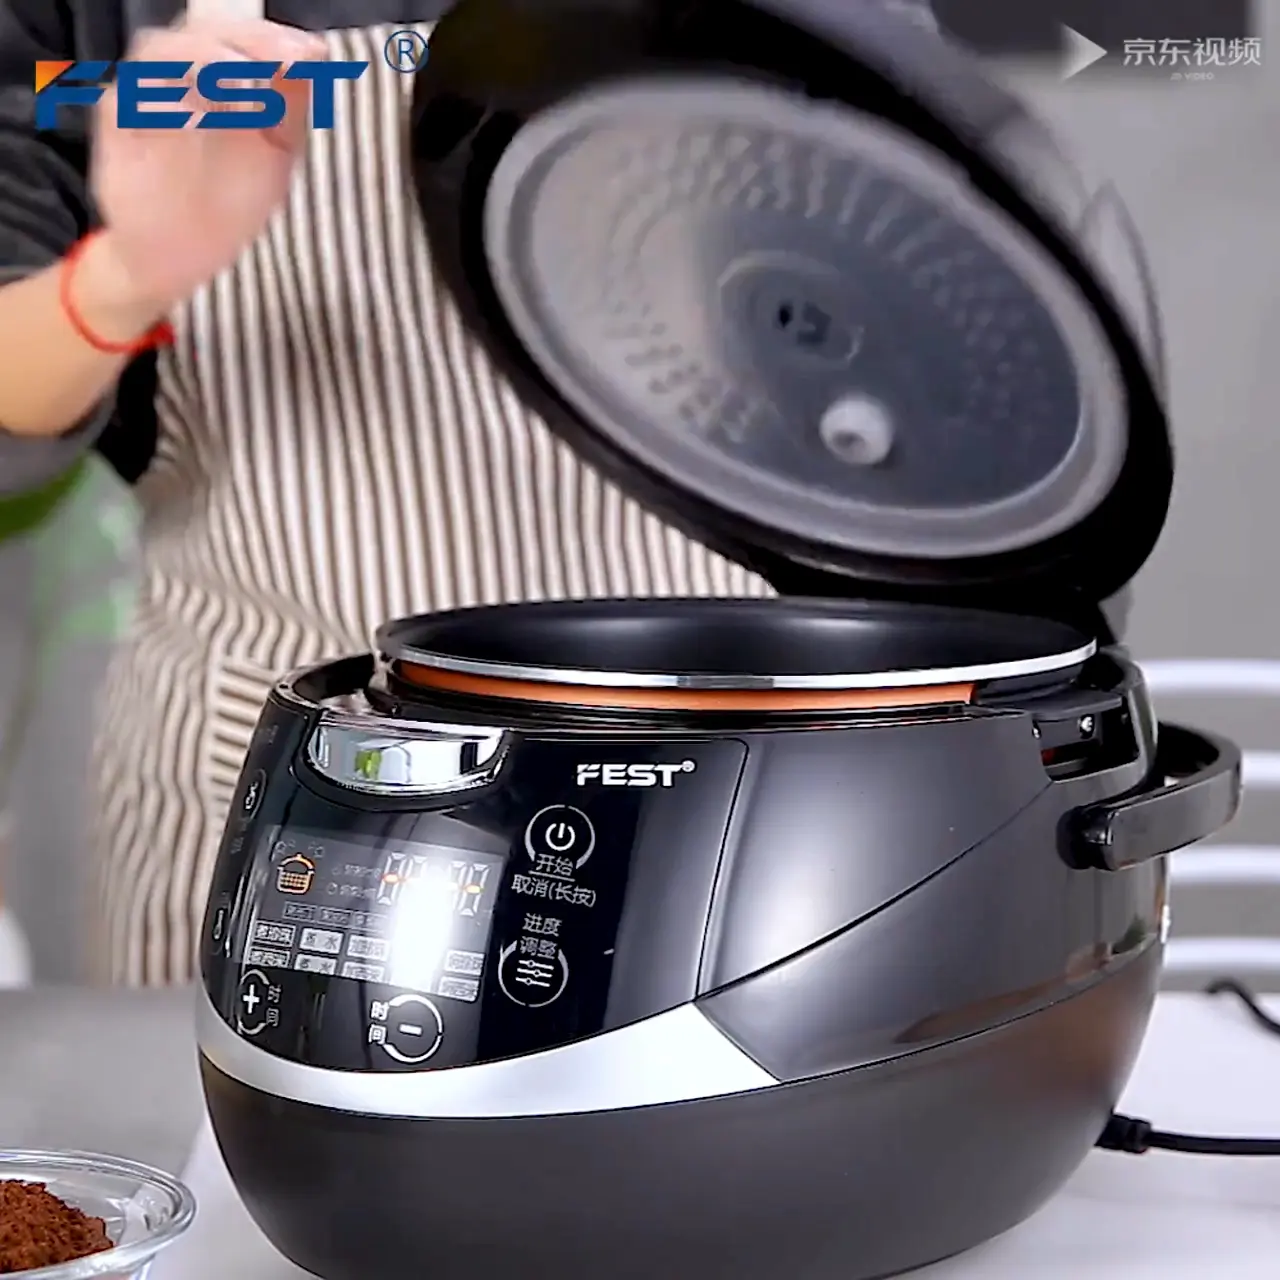 FEST multi cooker tapioca/jelly/pudding/sago/taro/beans cooking equipment smart cooking machine 5l